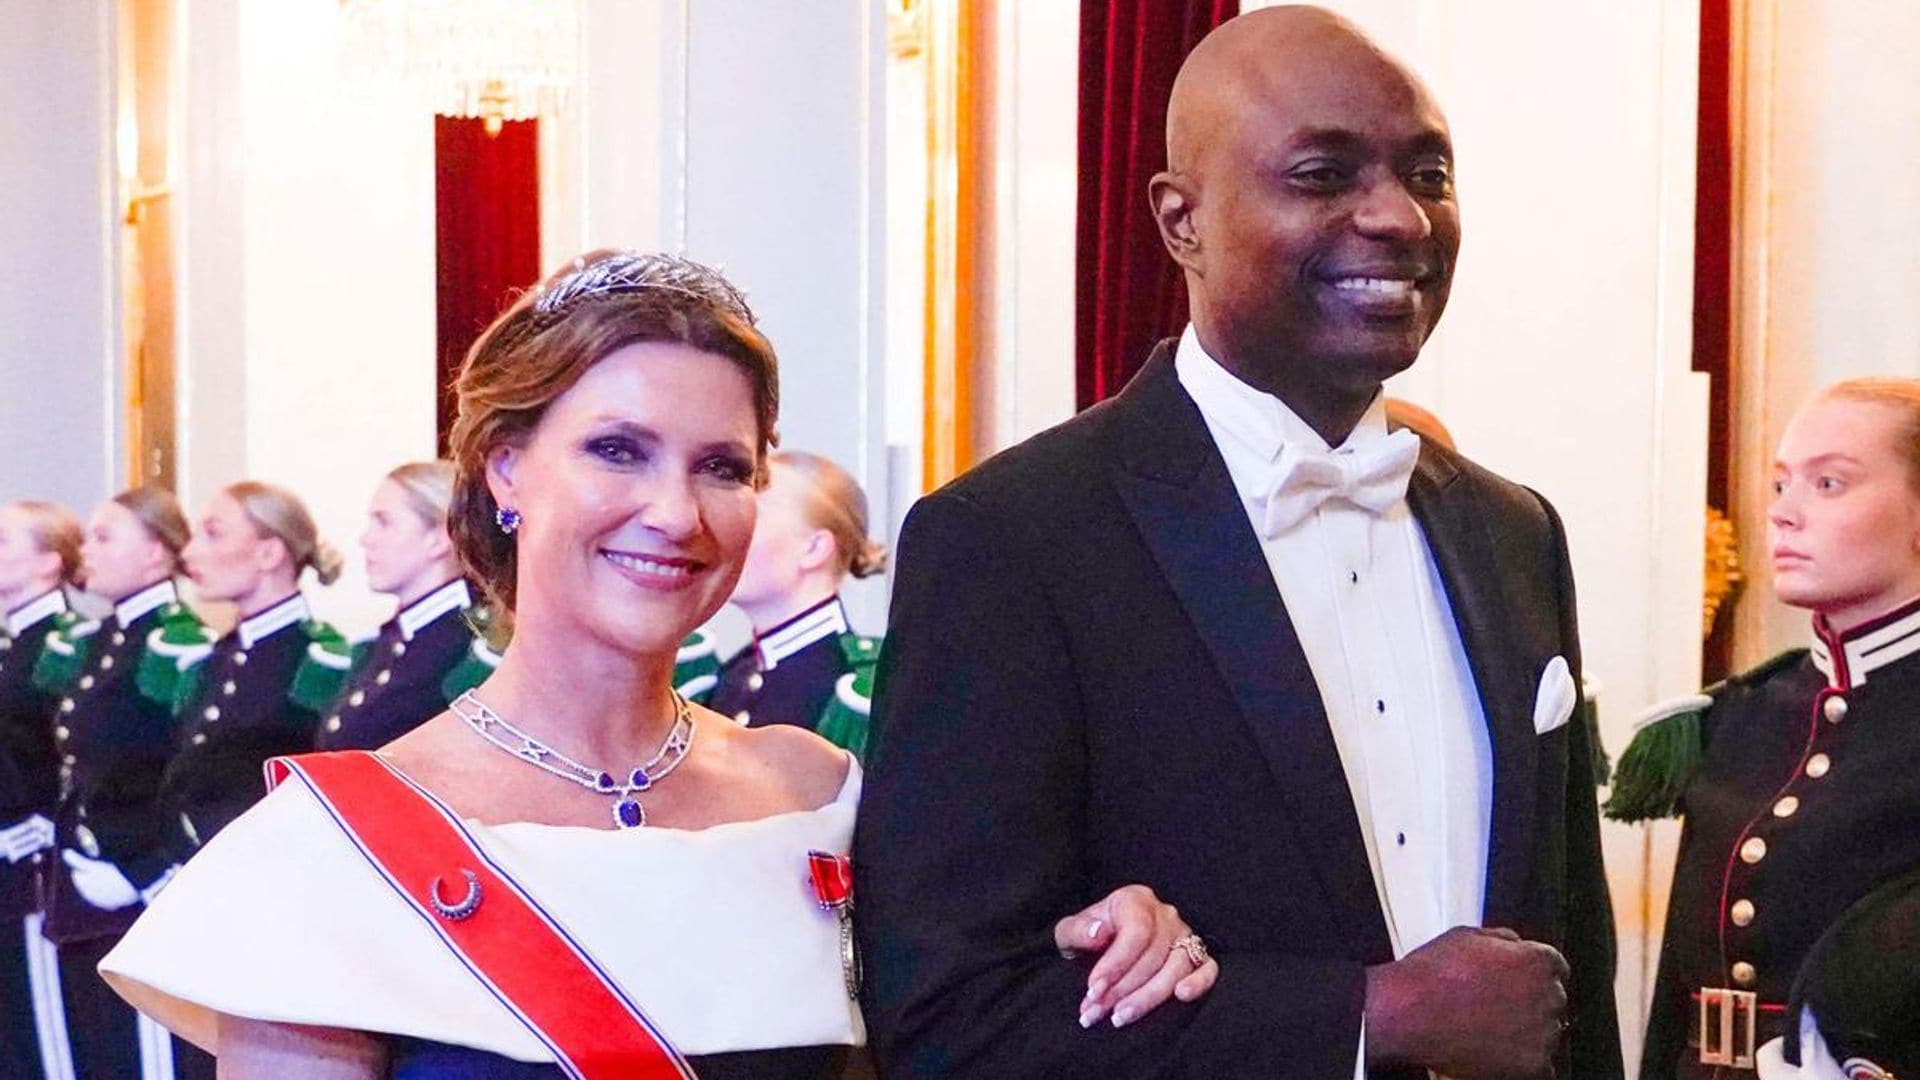 Norwegian royals release statements on Princess Martha Louise's wedding